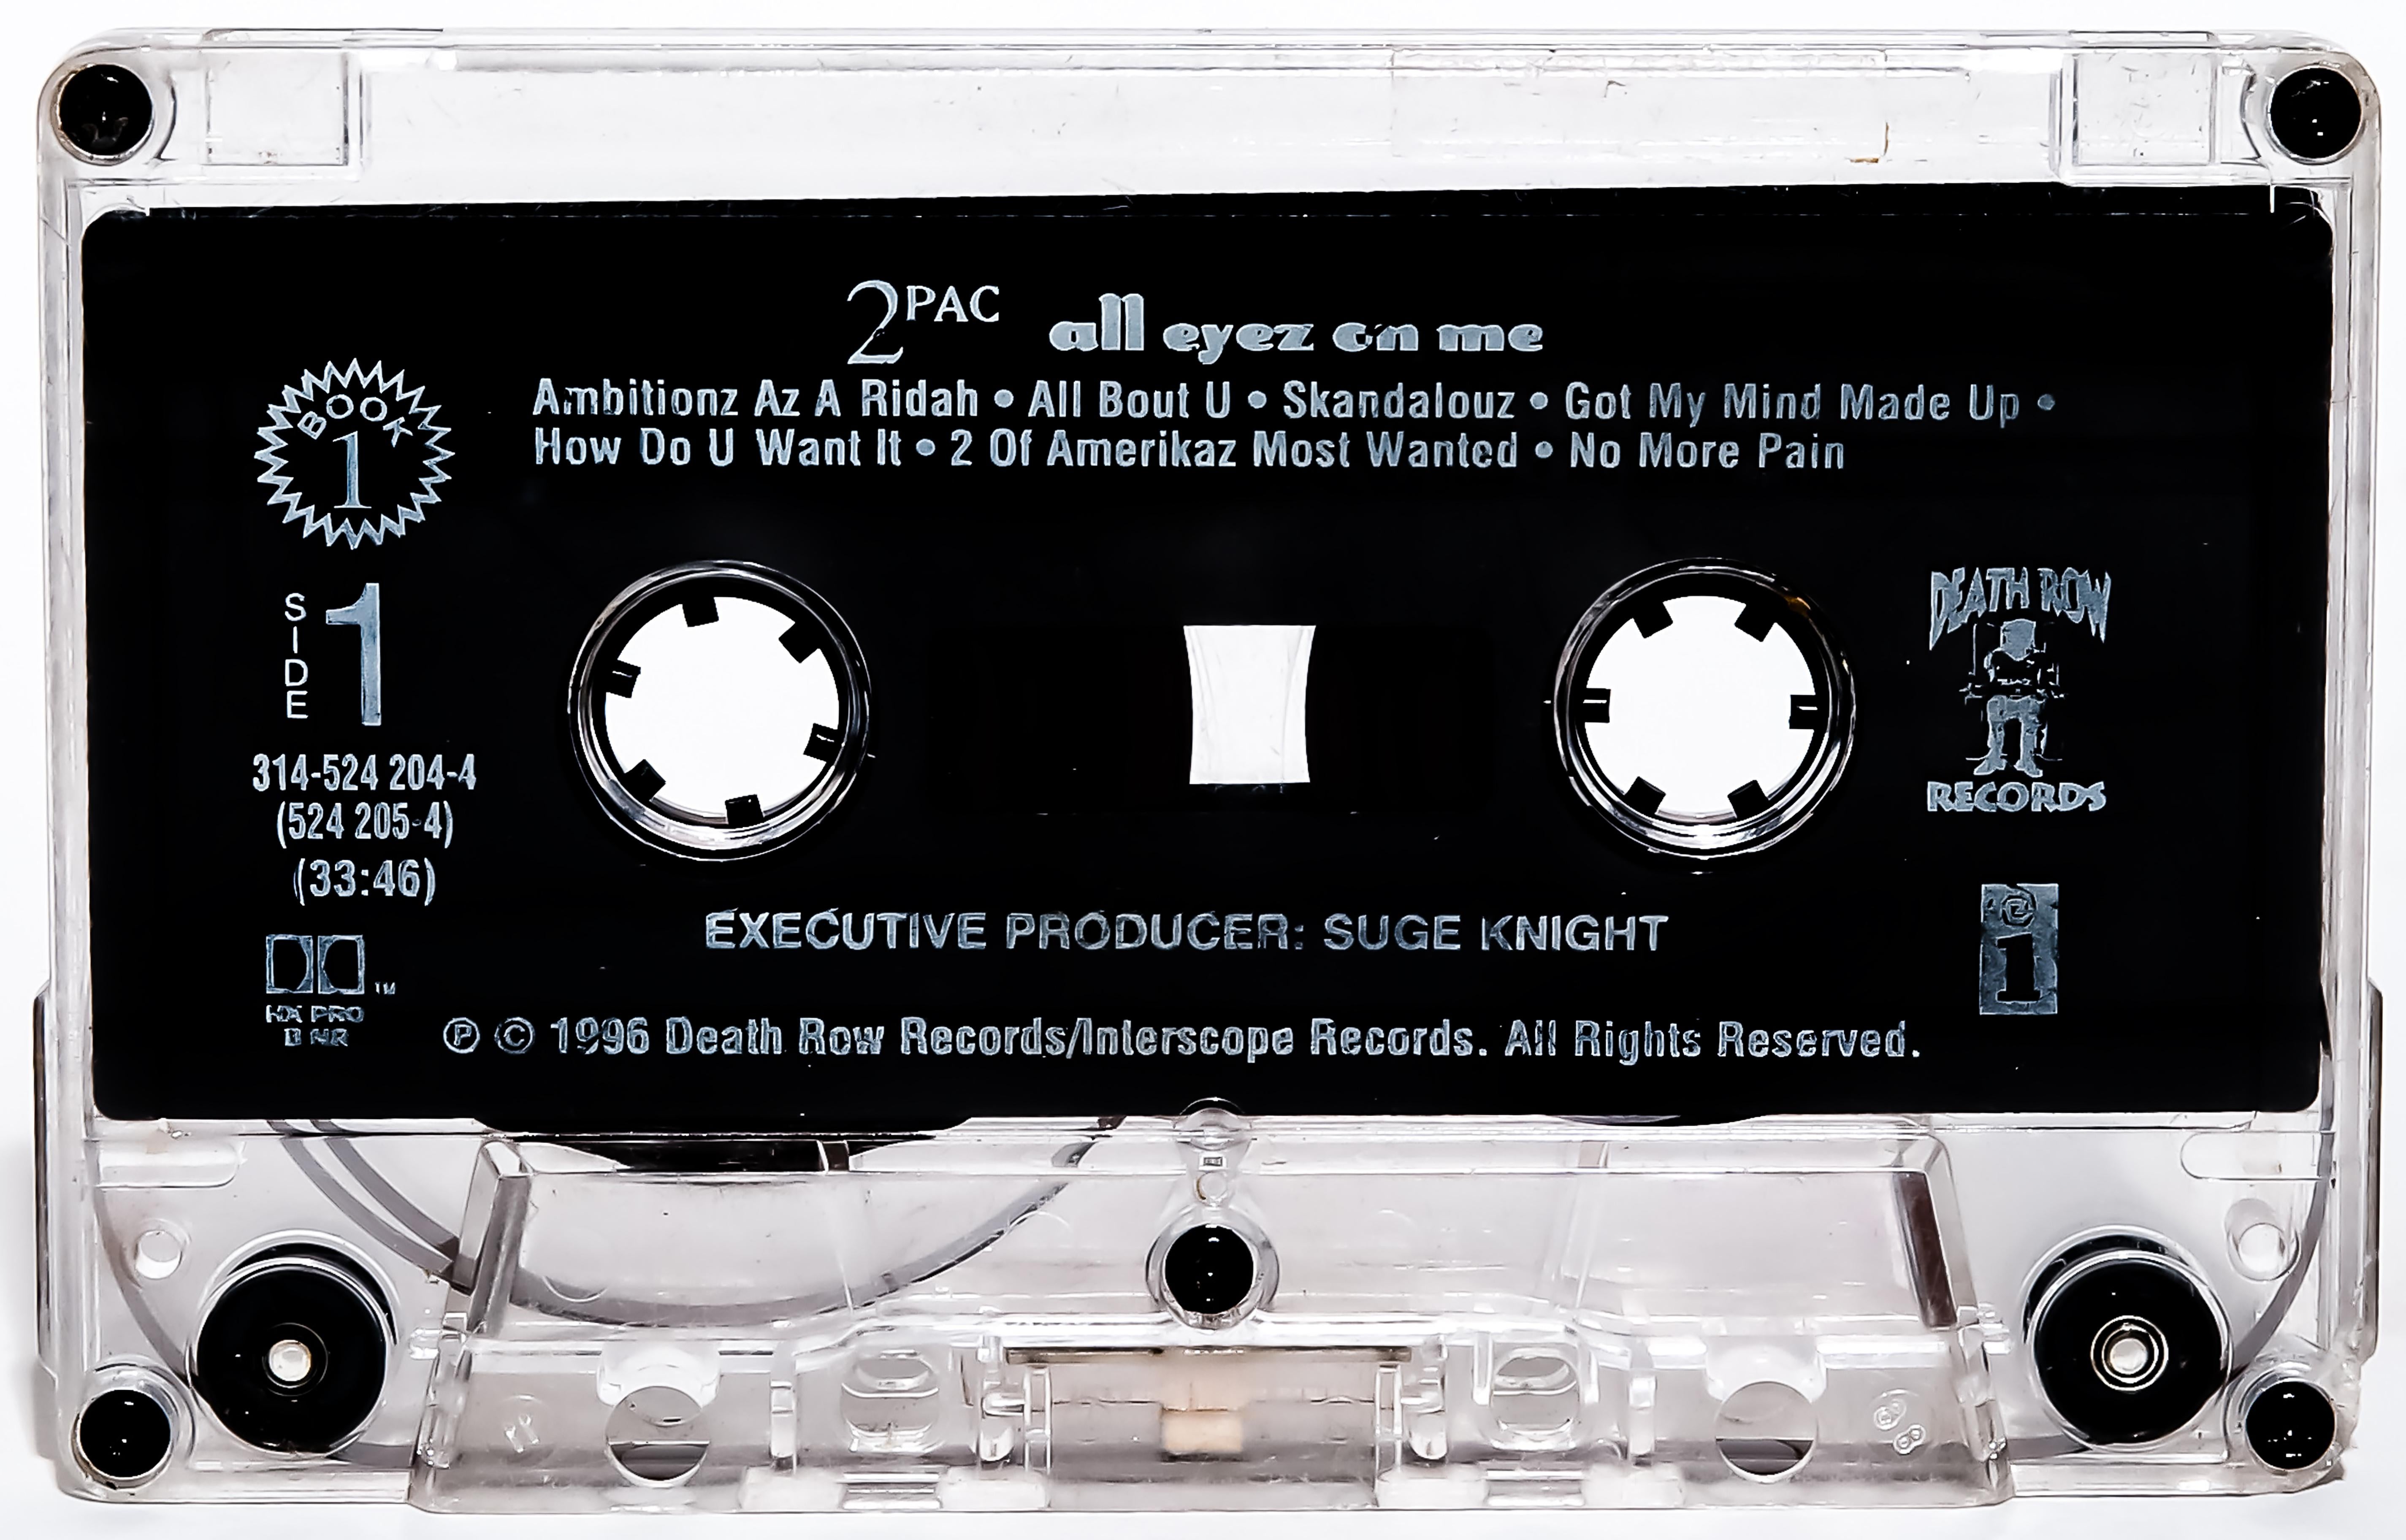 40x60 Tupac Shakur 2pac "All Eyez On Me" Kassette Fotografie  Pop-Art von Destro